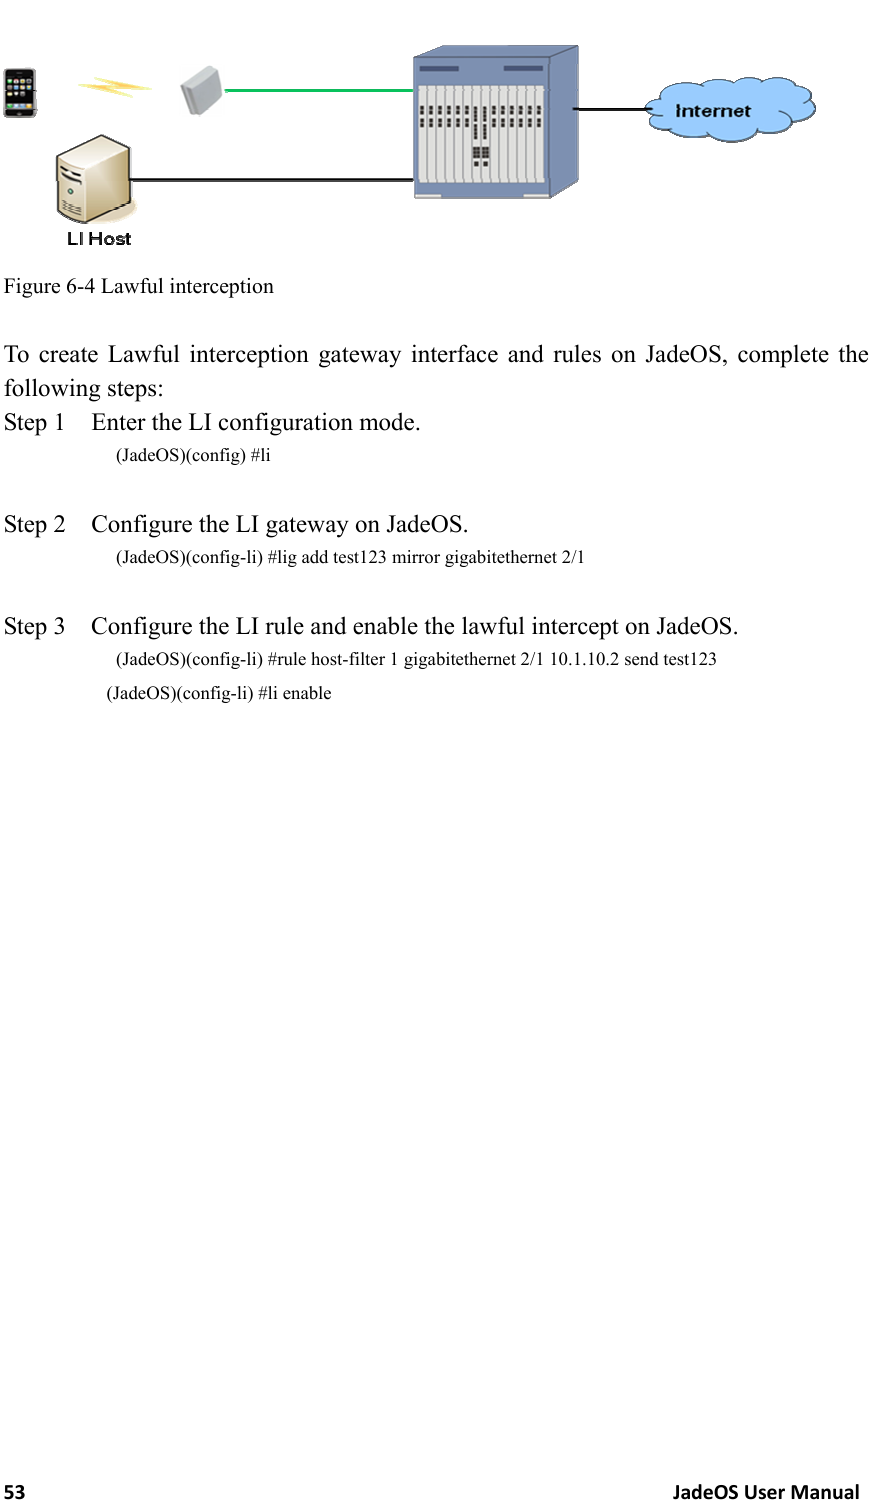 53JadeOSUserManual Figure 6-4 Lawful interception  To create Lawful interception gateway interface and rules on JadeOS, complete the following steps: Step 1   Enter the LI configuration mode.  (JadeOS)(config) #li  Step 2   Configure the LI gateway on JadeOS.   (JadeOS)(config-li) #lig add test123 mirror gigabitethernet 2/1  Step 3    Configure the LI rule and enable the lawful intercept on JadeOS.   (JadeOS)(config-li) #rule host-filter 1 gigabitethernet 2/1 10.1.10.2 send test123 (JadeOS)(config-li) #li enable 